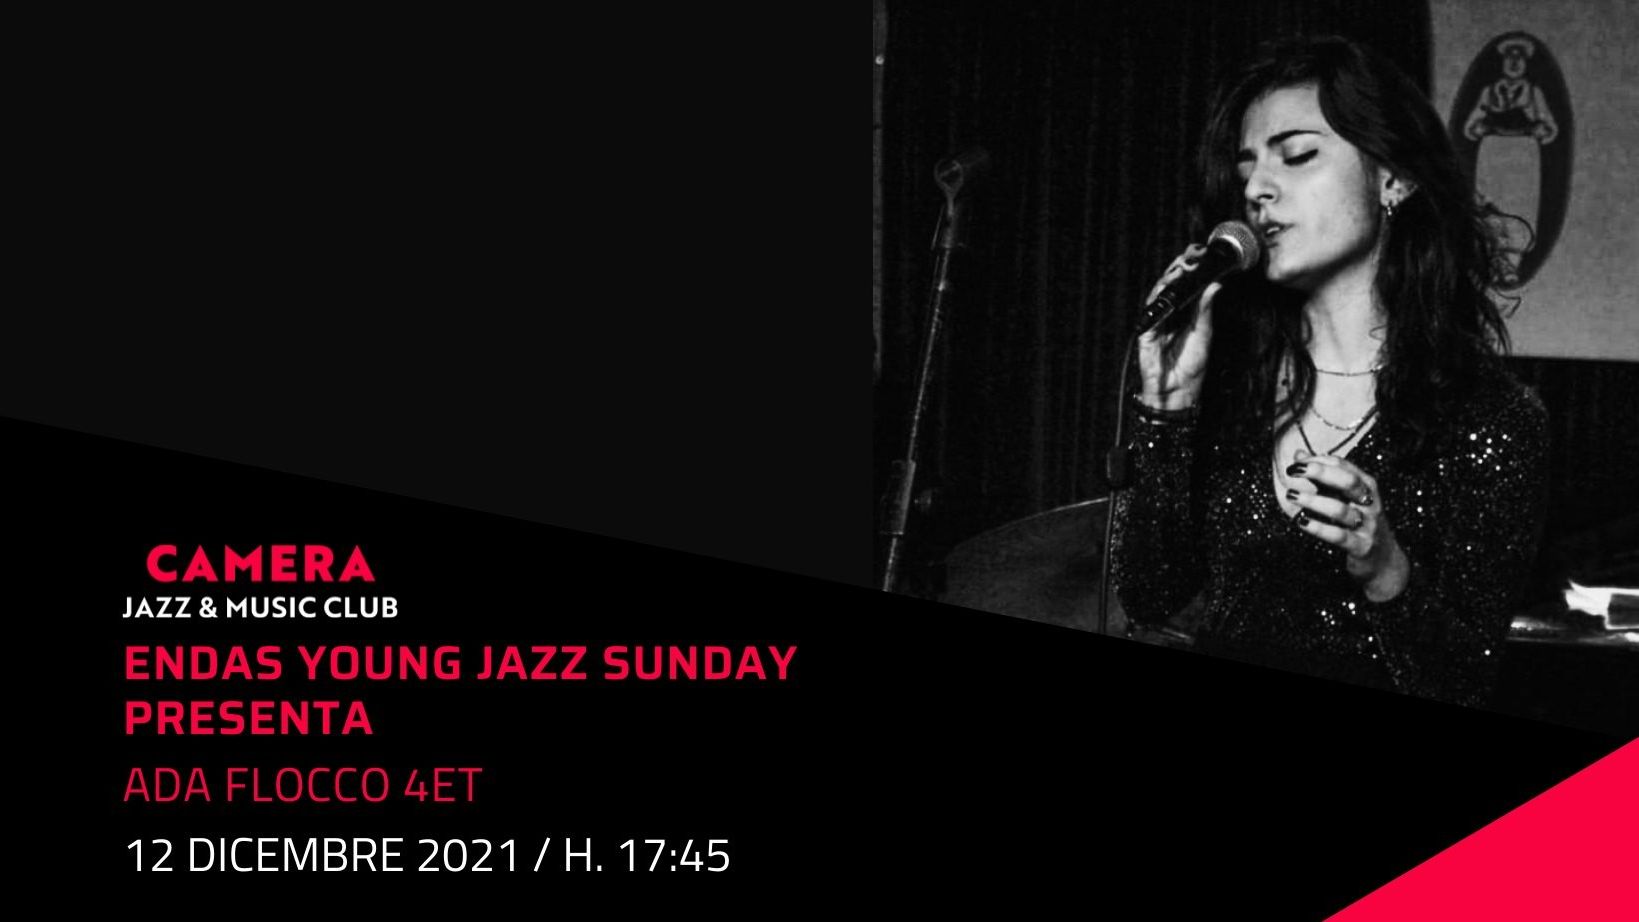 Endas Young Jazz Sunday presenta “Ada Flocco 4et”